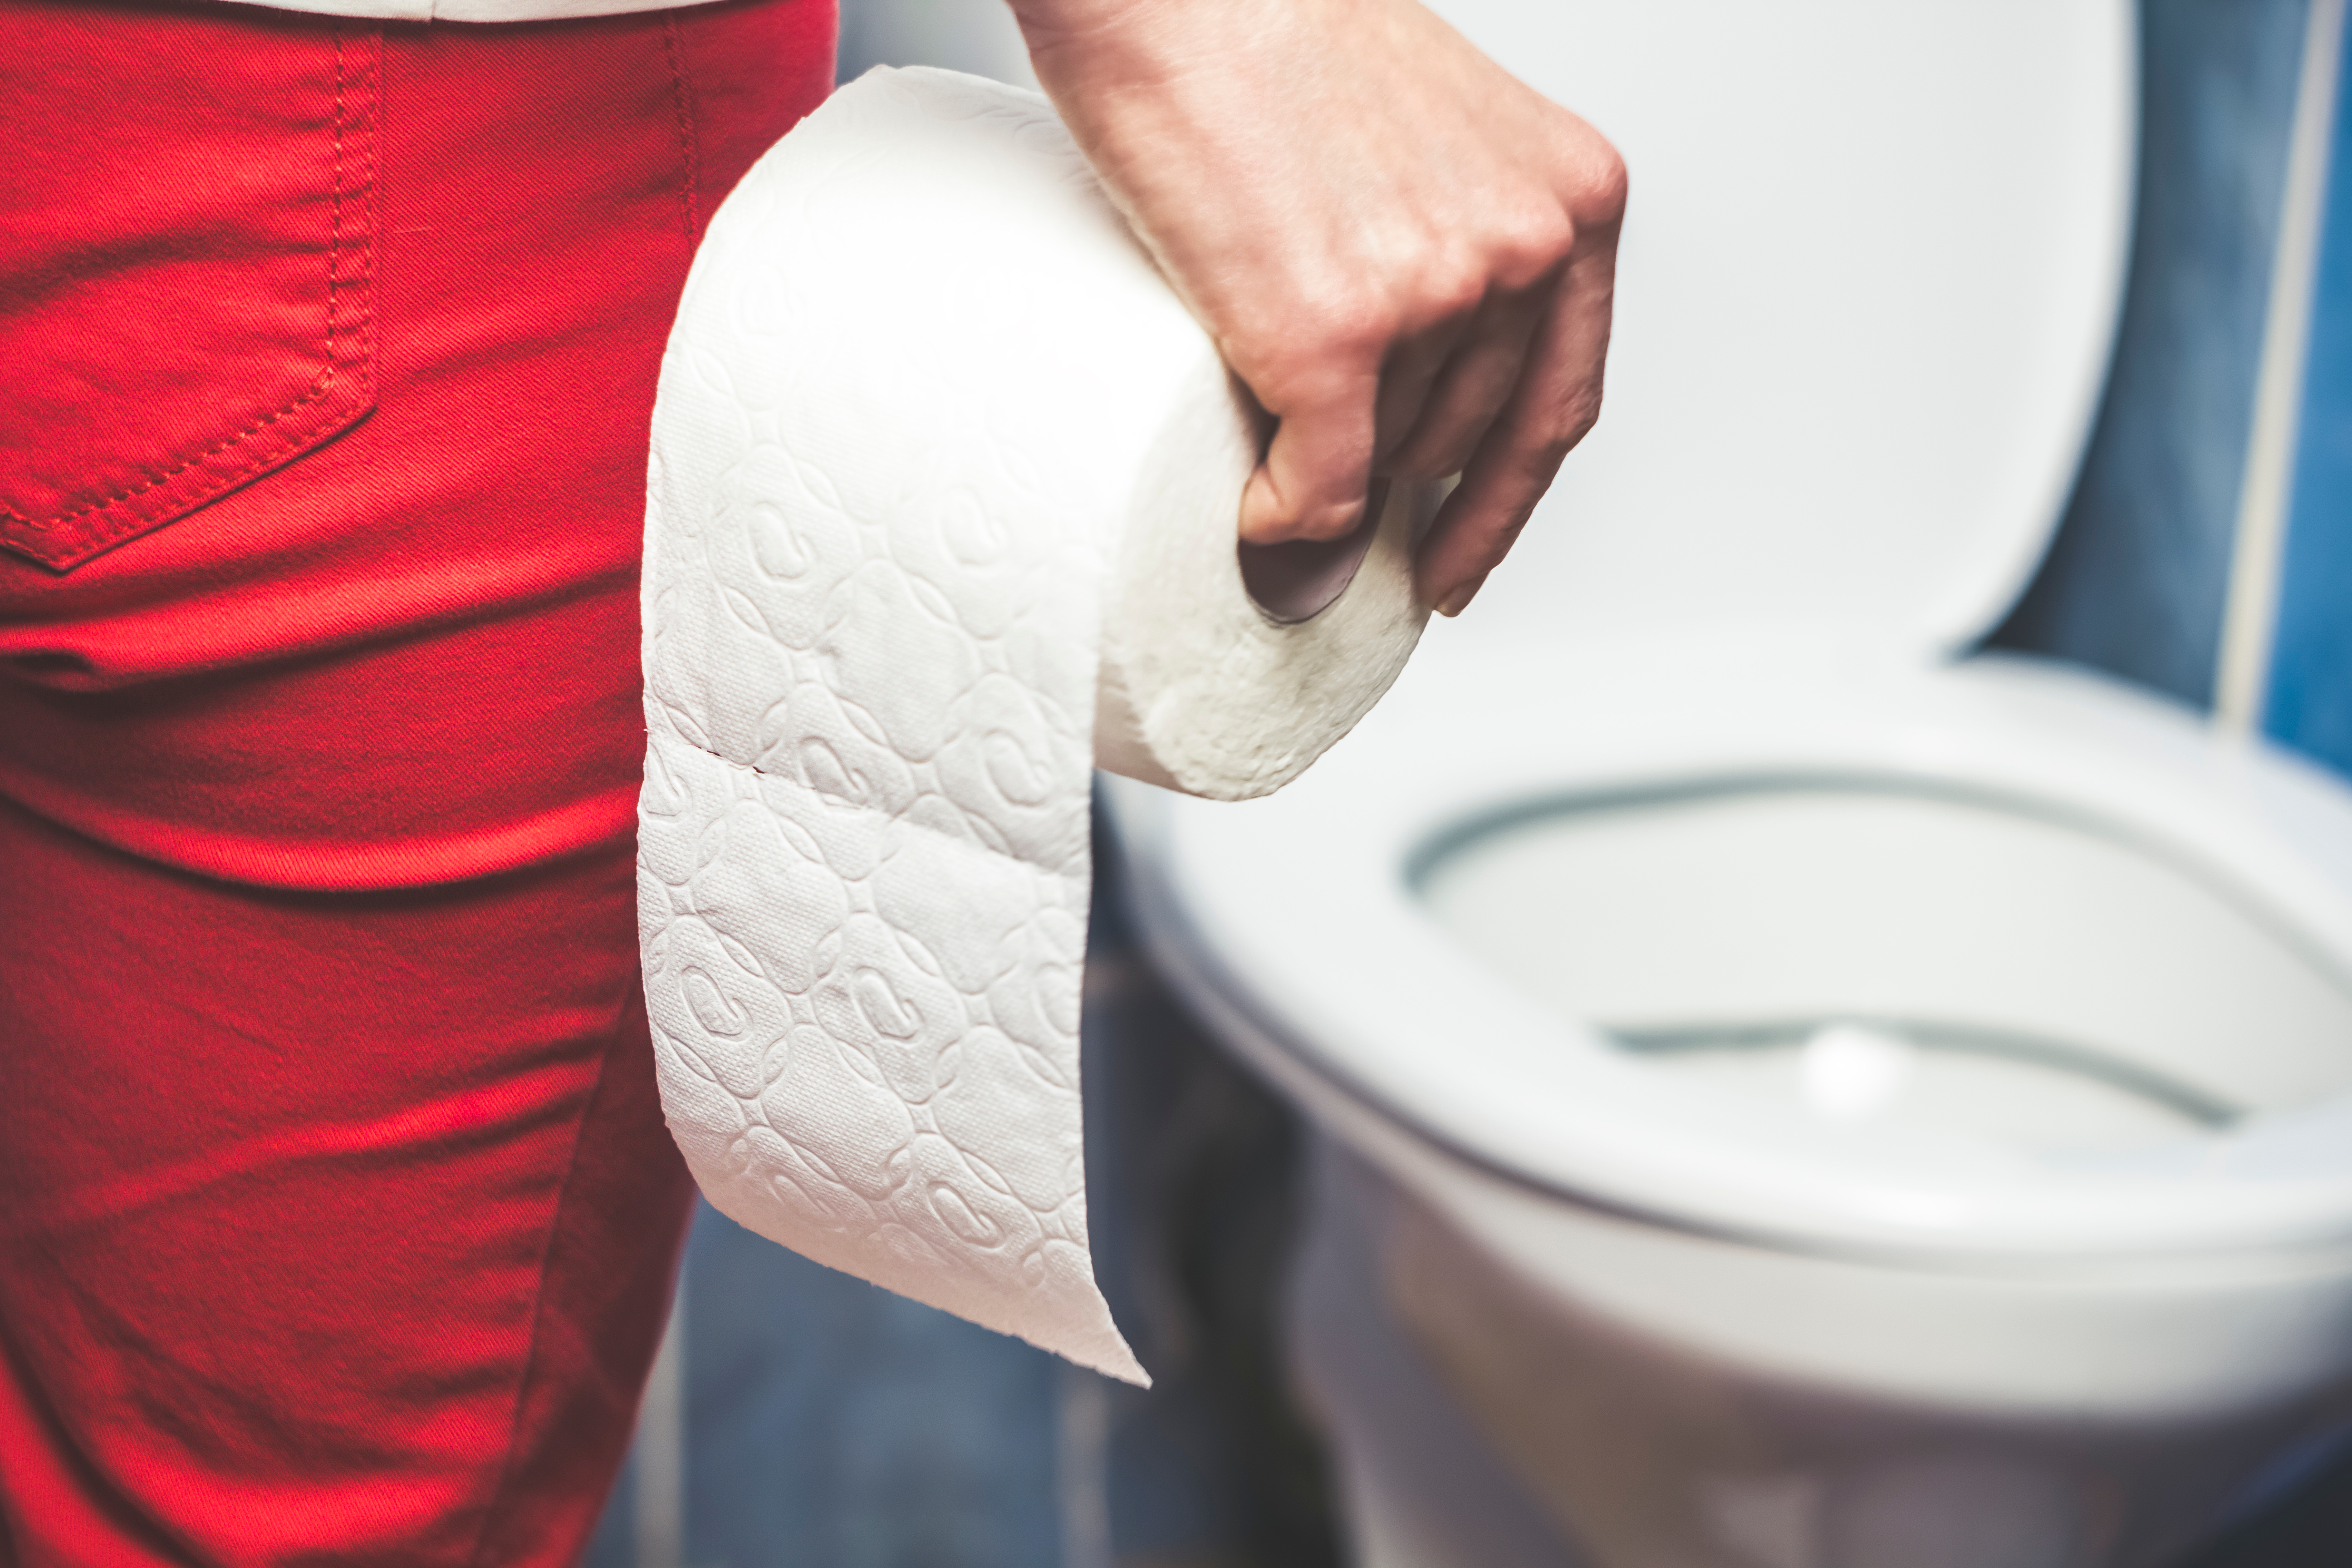 Bits of Foam in Diarrhea Explained by Doctor